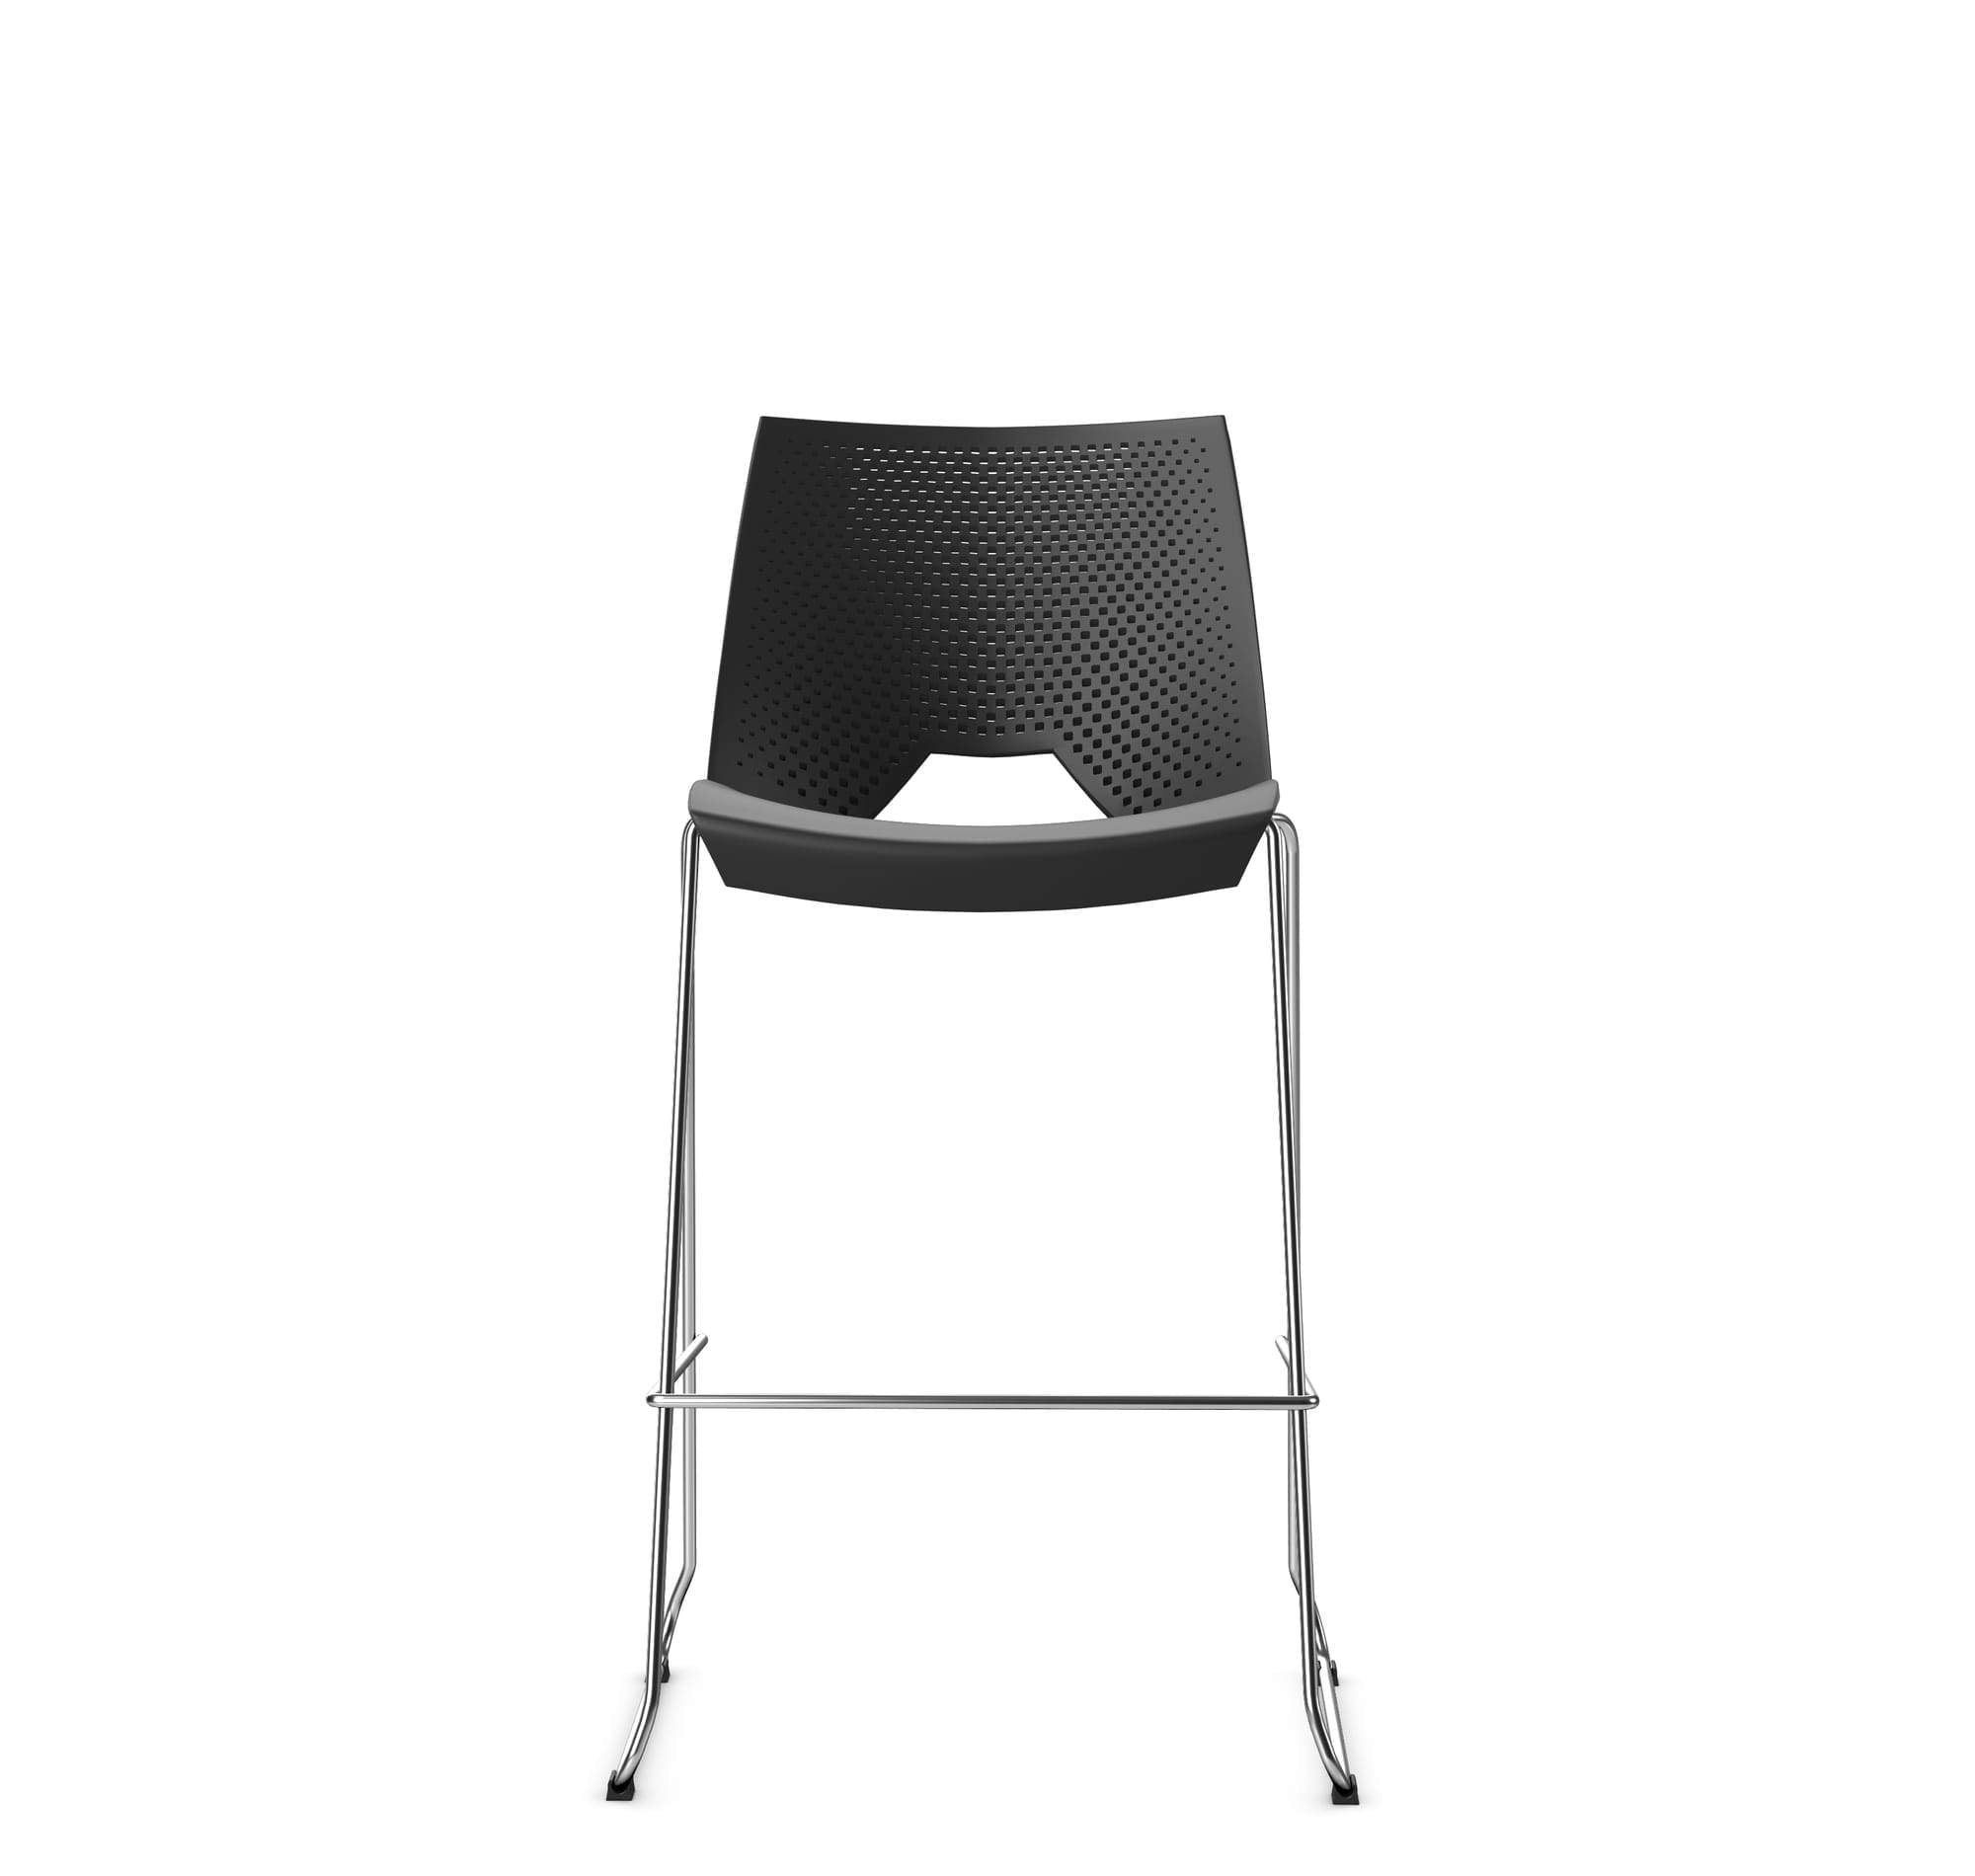 KB-STRIKE-PL stool / wire frame